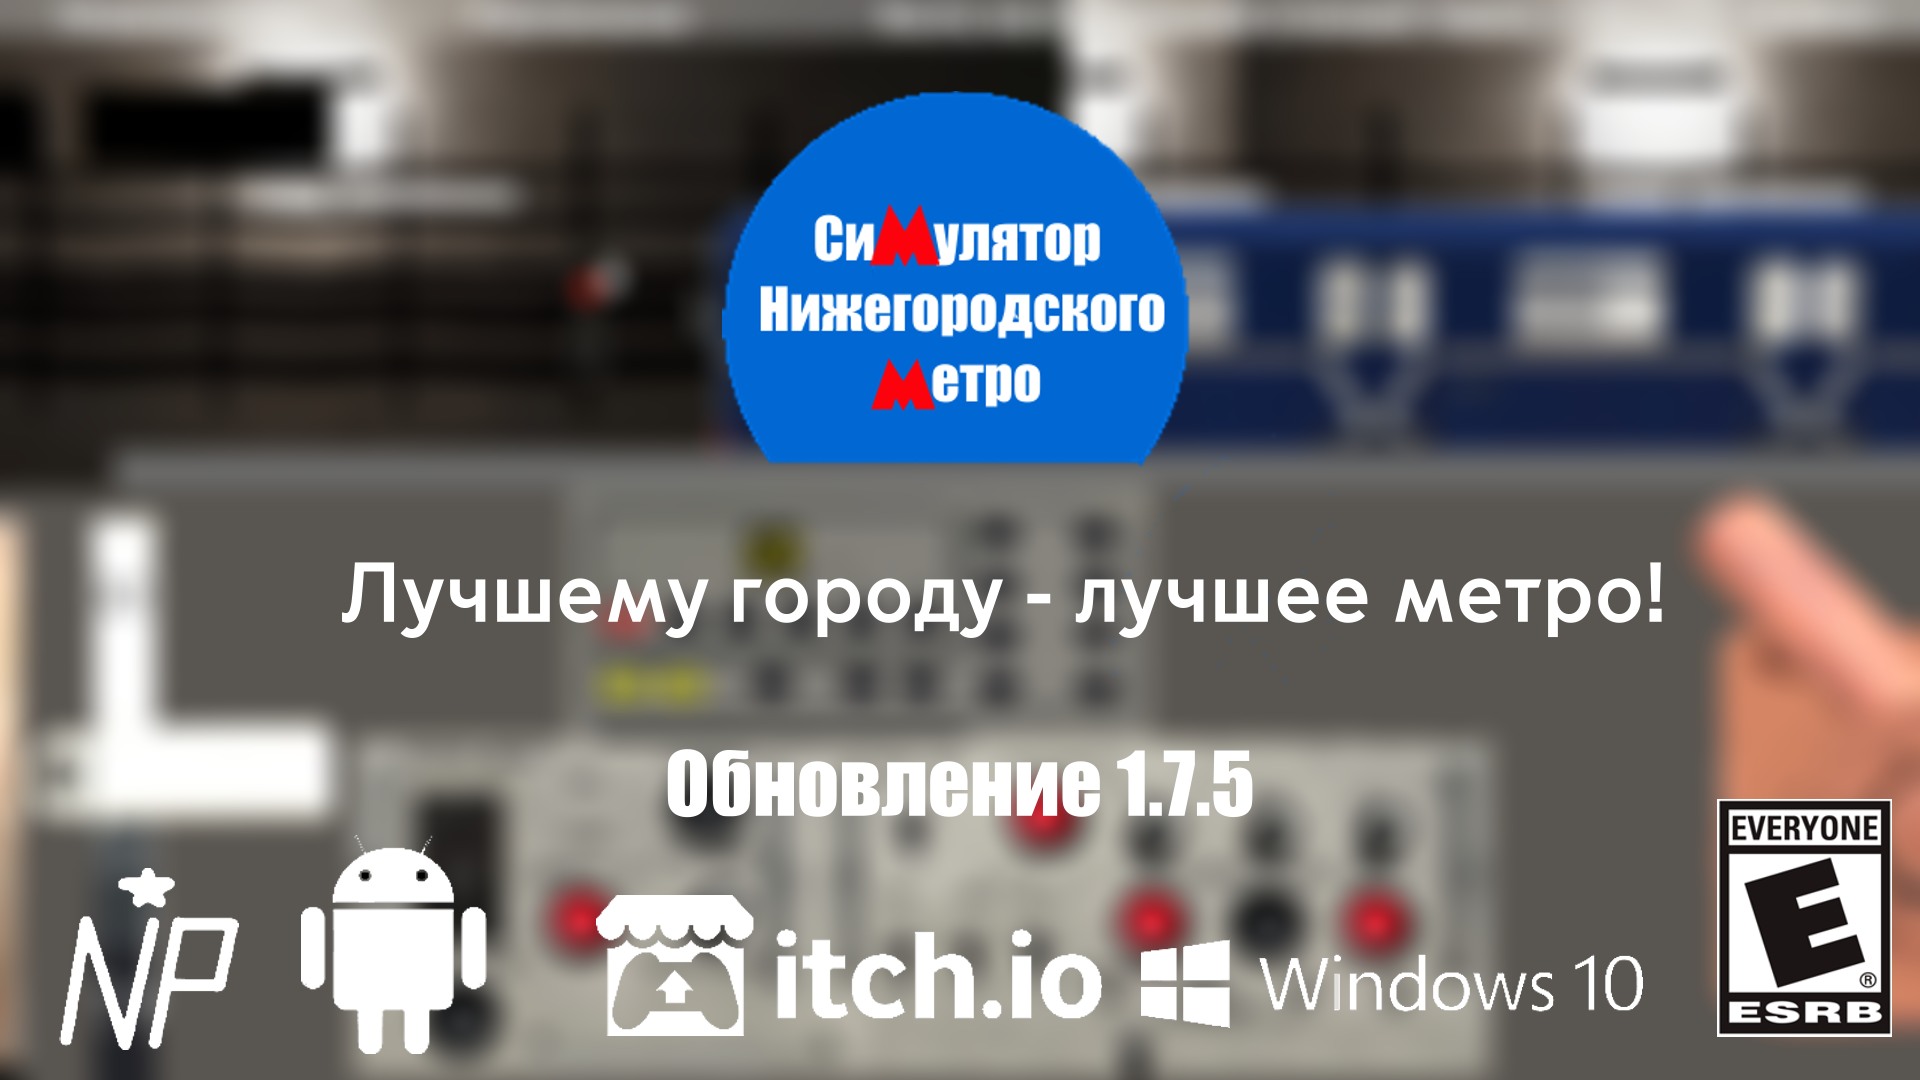 Nizhniy Novgorod Subway Simulator (Симулятор Нижегородского метро)